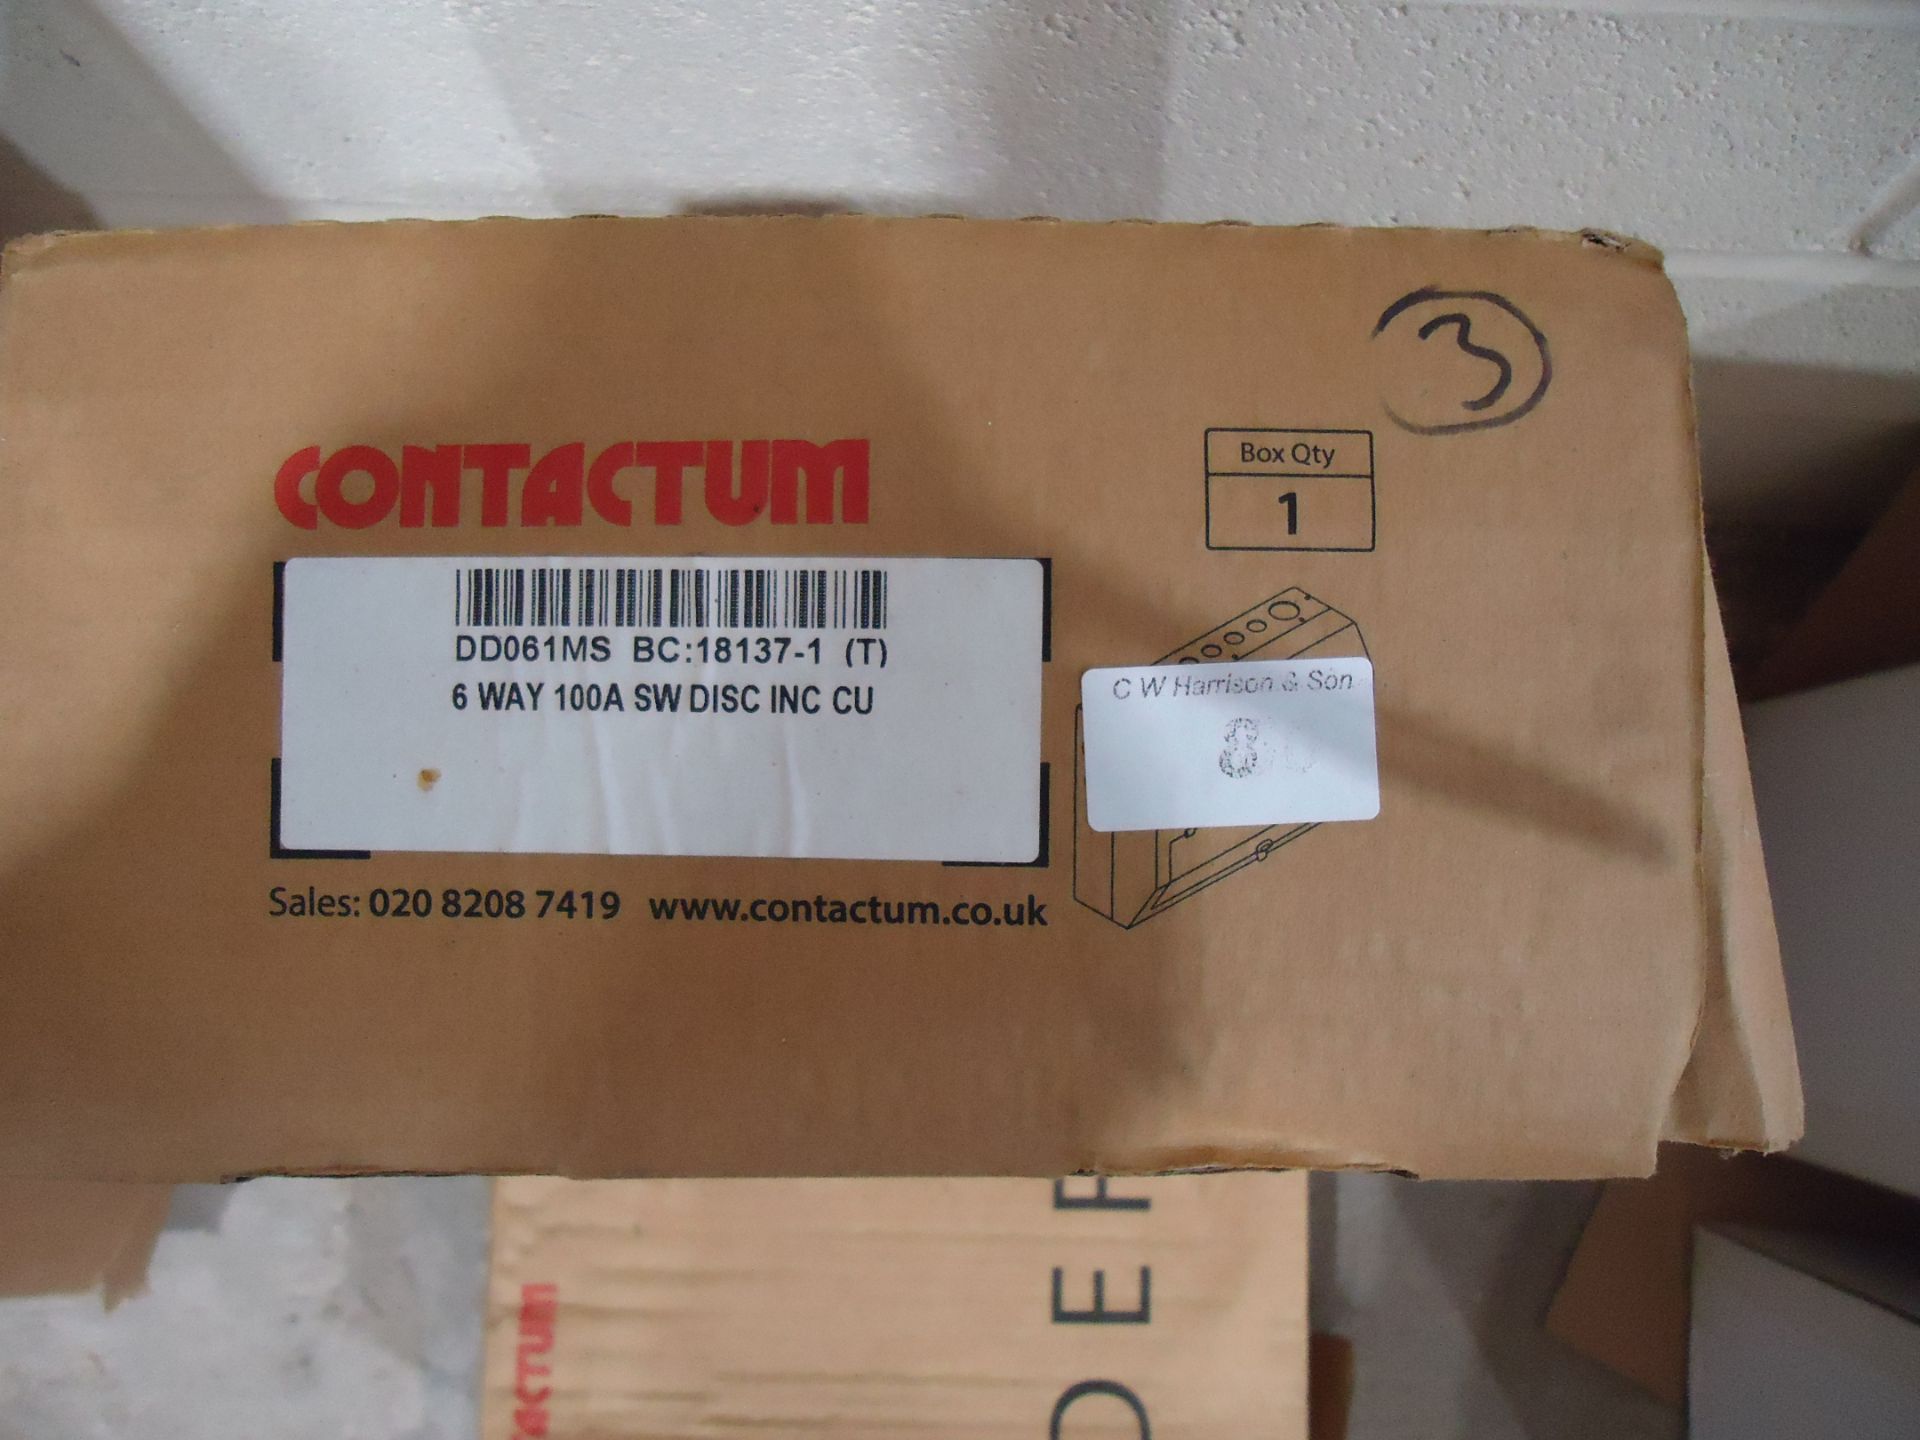 2 X CONTACTUM FUSE BOXES